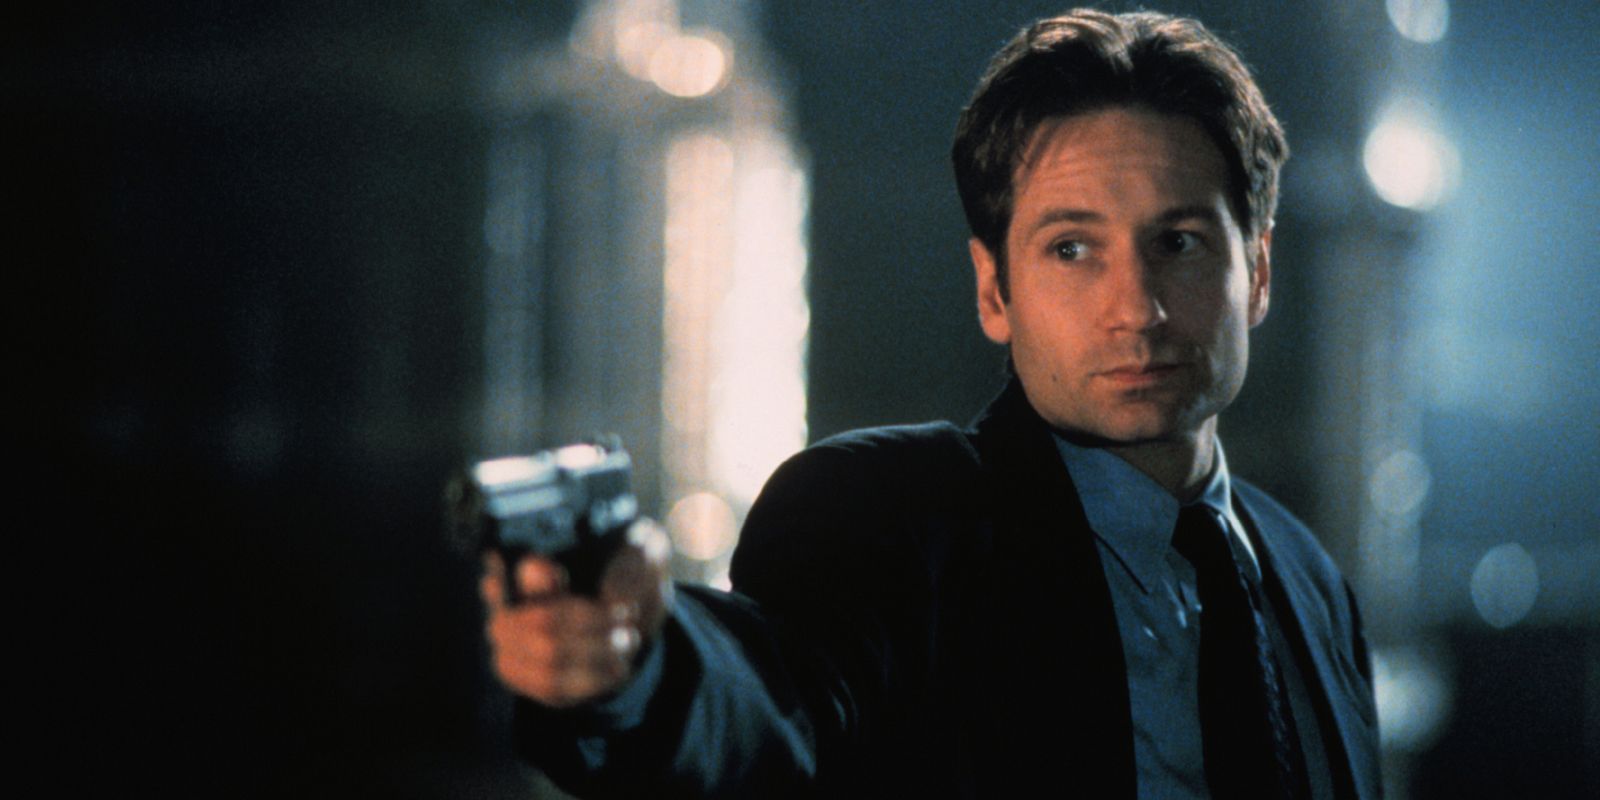 Fox Mulder pointing a gun in the X Files series.